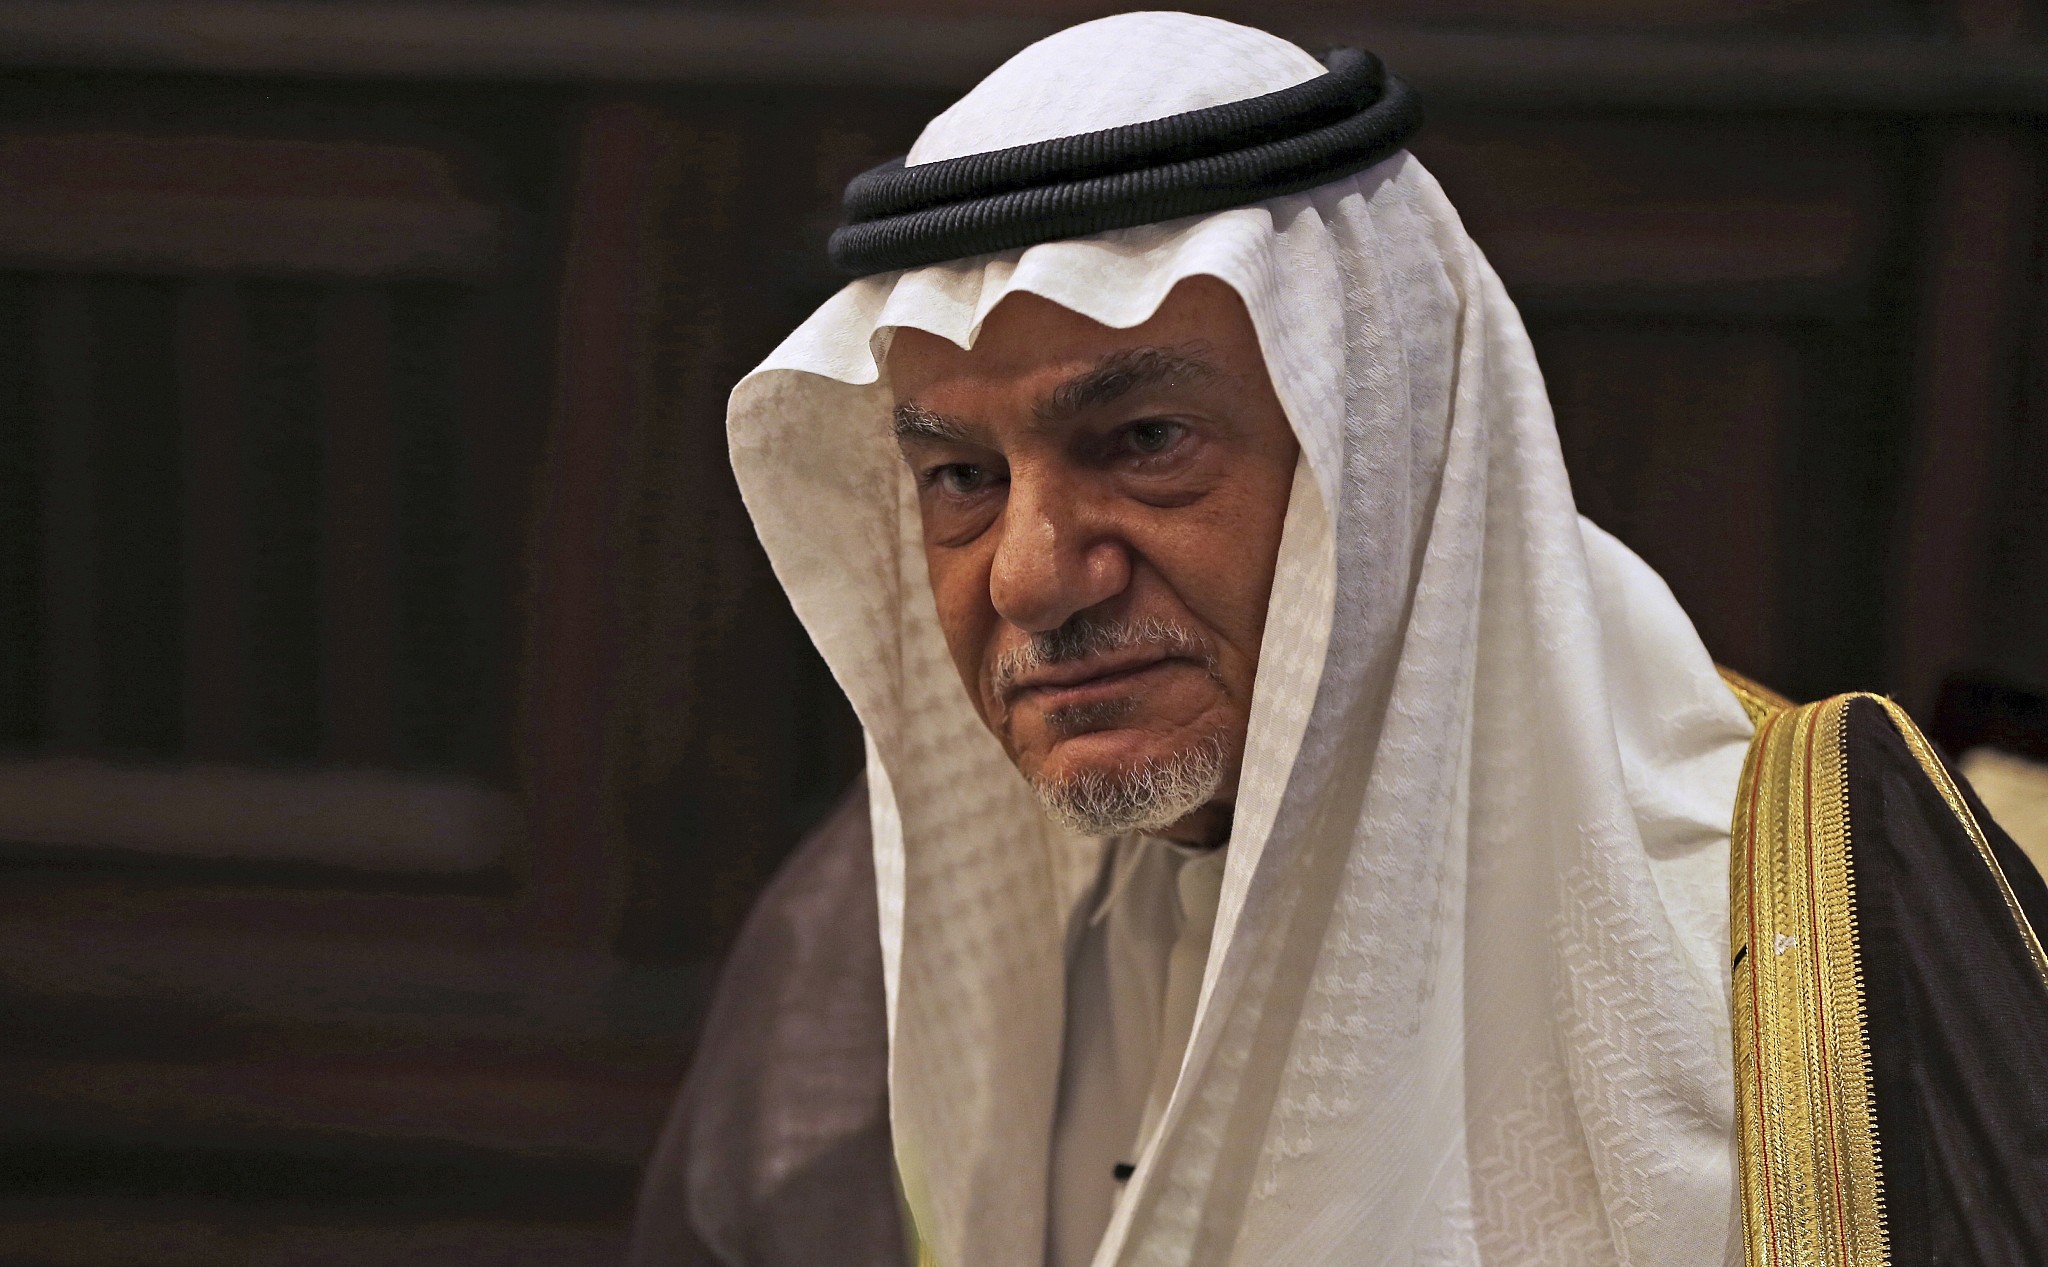 Saudi royal laments Khashoggi's killing, is wary on rapprochement with